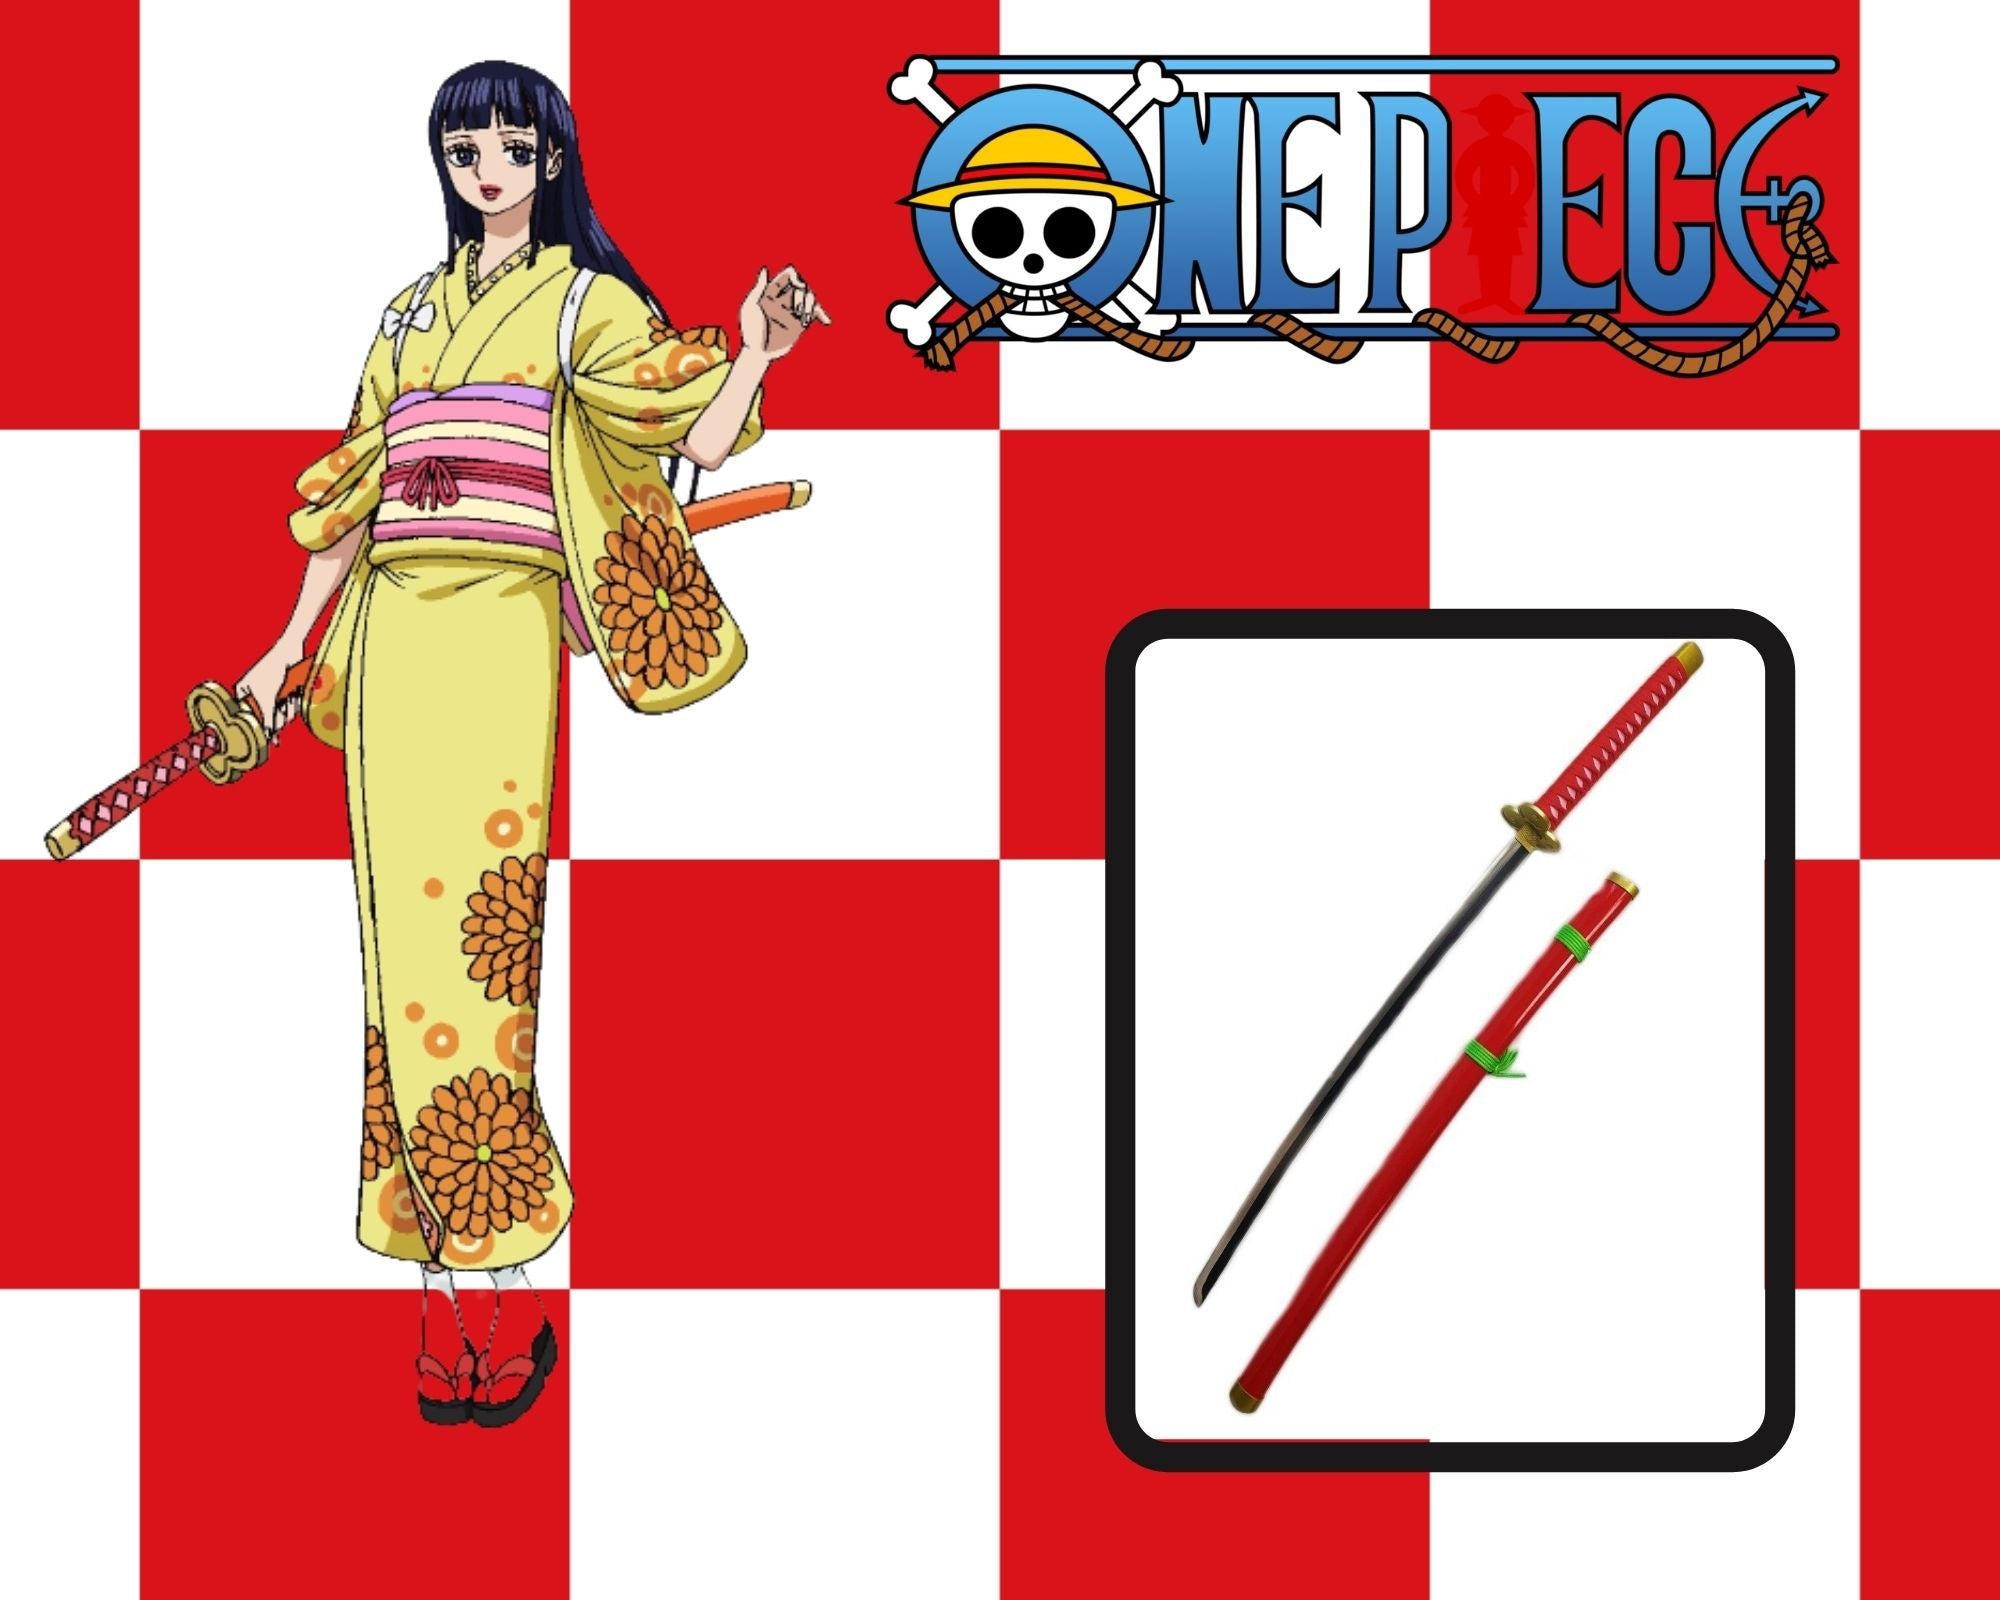 Anime Cosplay One Piece White Beard Edward Newgate Sword Weapon Bisento  Cosplay Replica Prop Wood PVC Swords Preformance Props